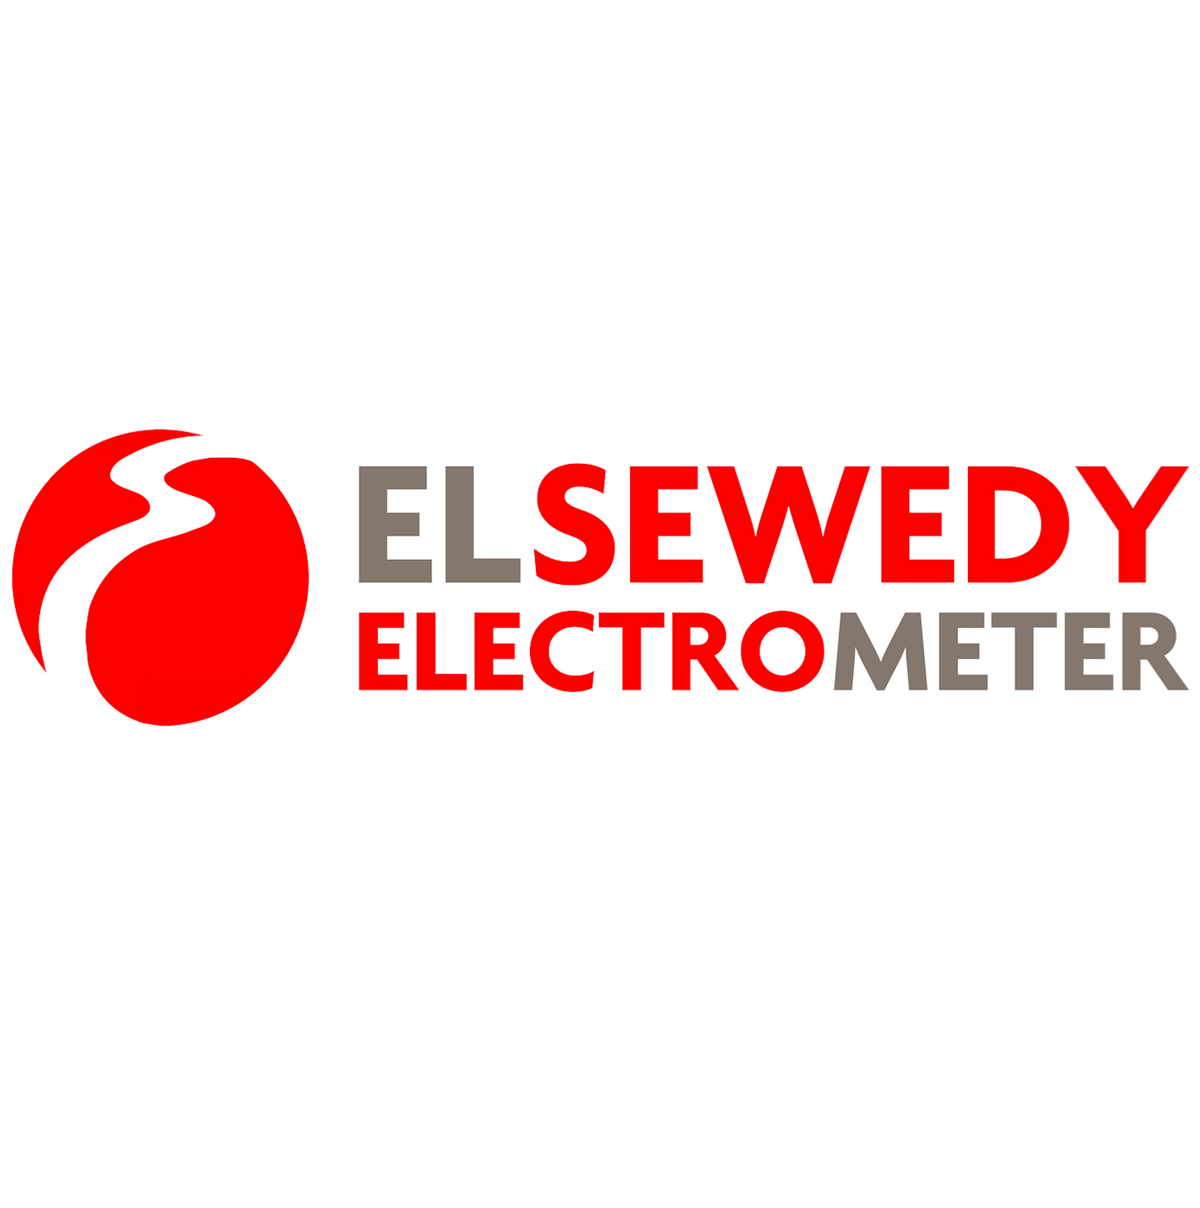 El Sewedy Electrometer group